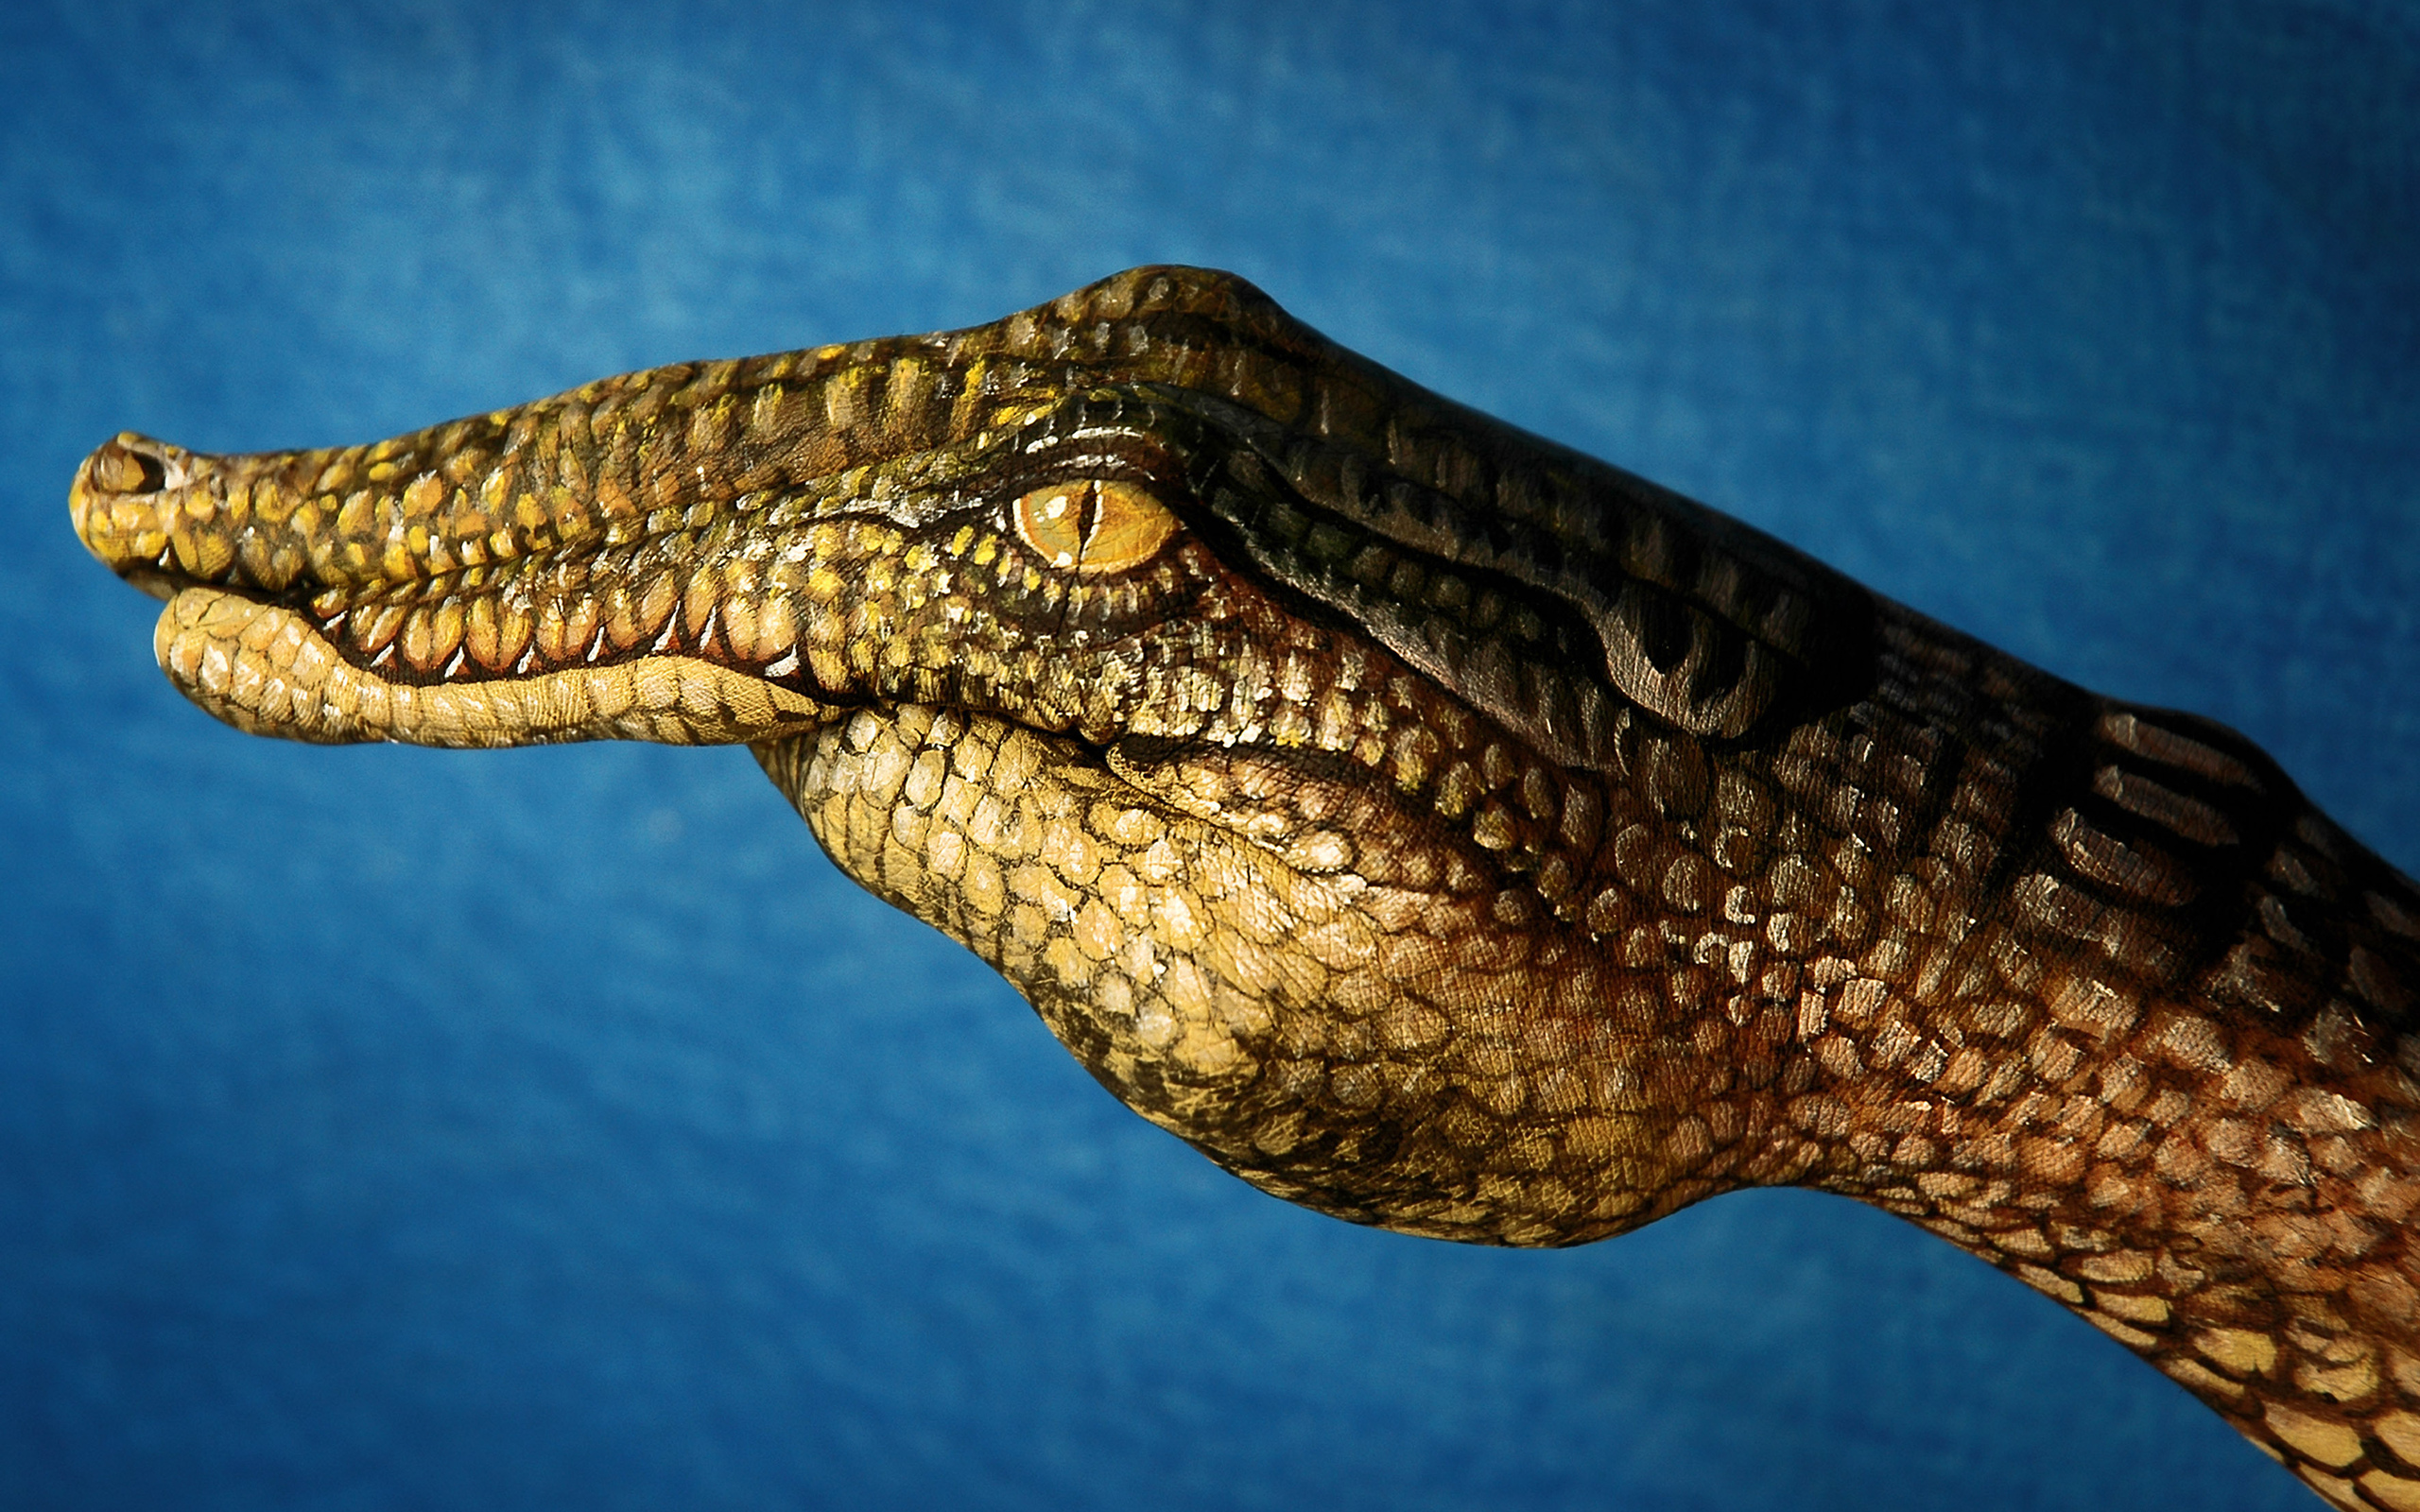 General 2560x1600 hands crocodiles digital art simple background animals reptiles blue background